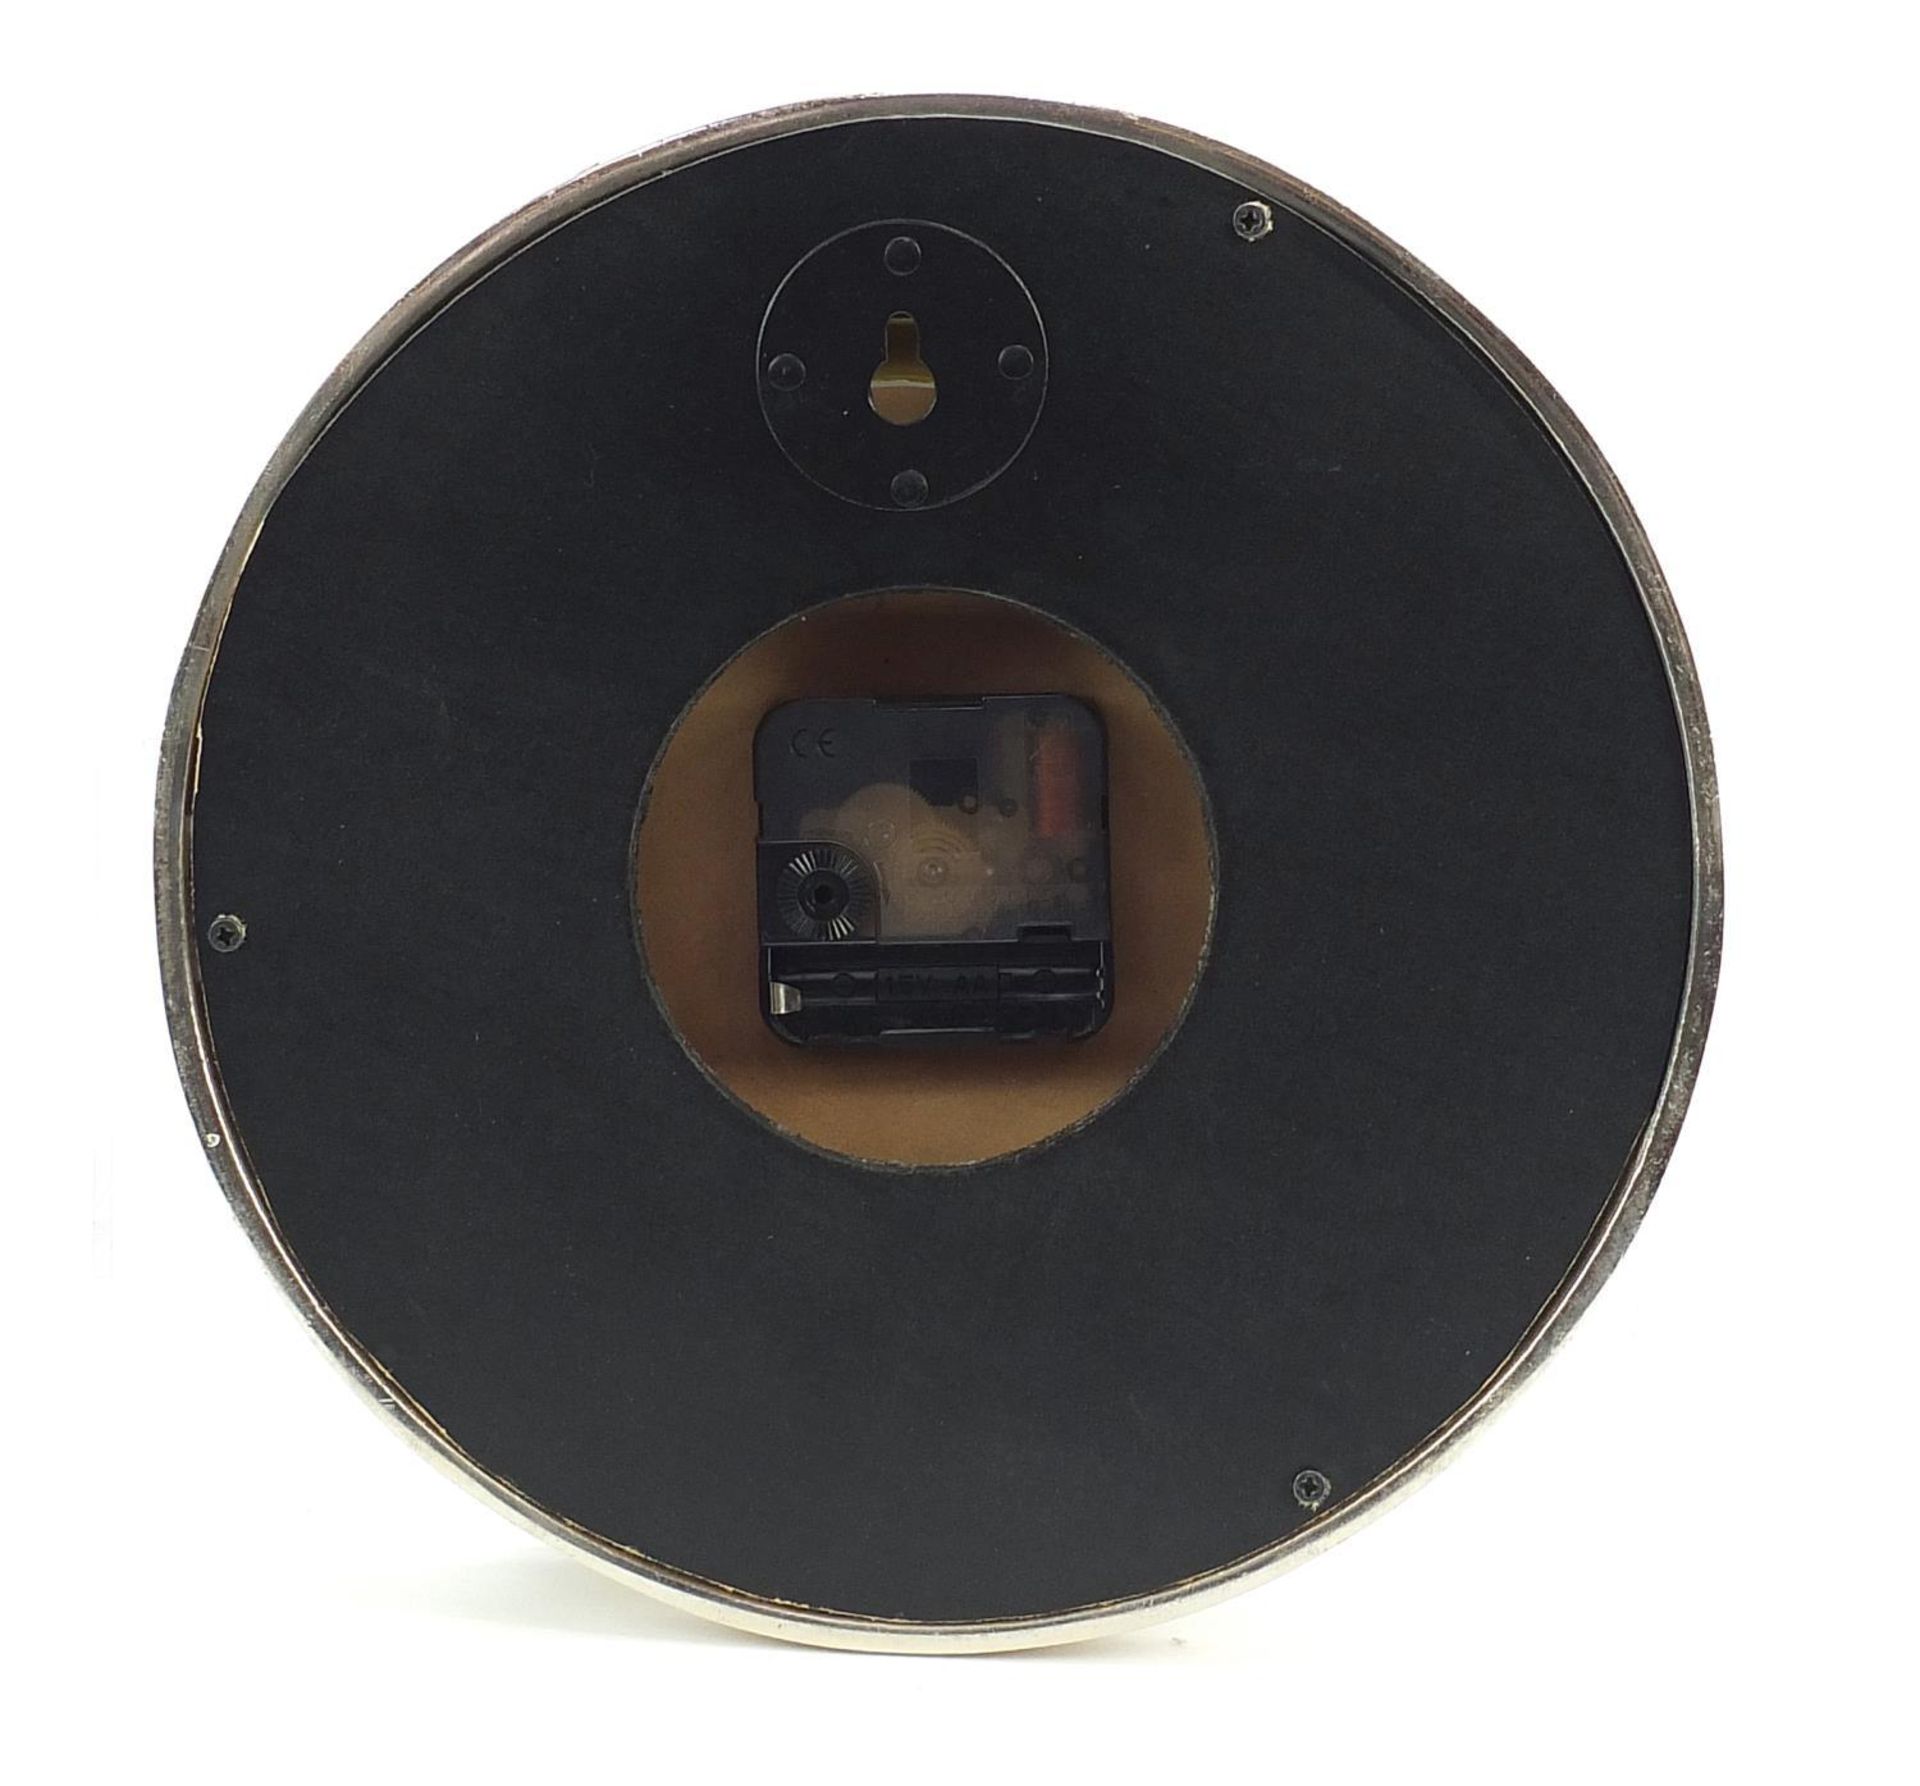 Neptune port hole design nickel wall clock, 23cm in diameter - Image 2 of 2